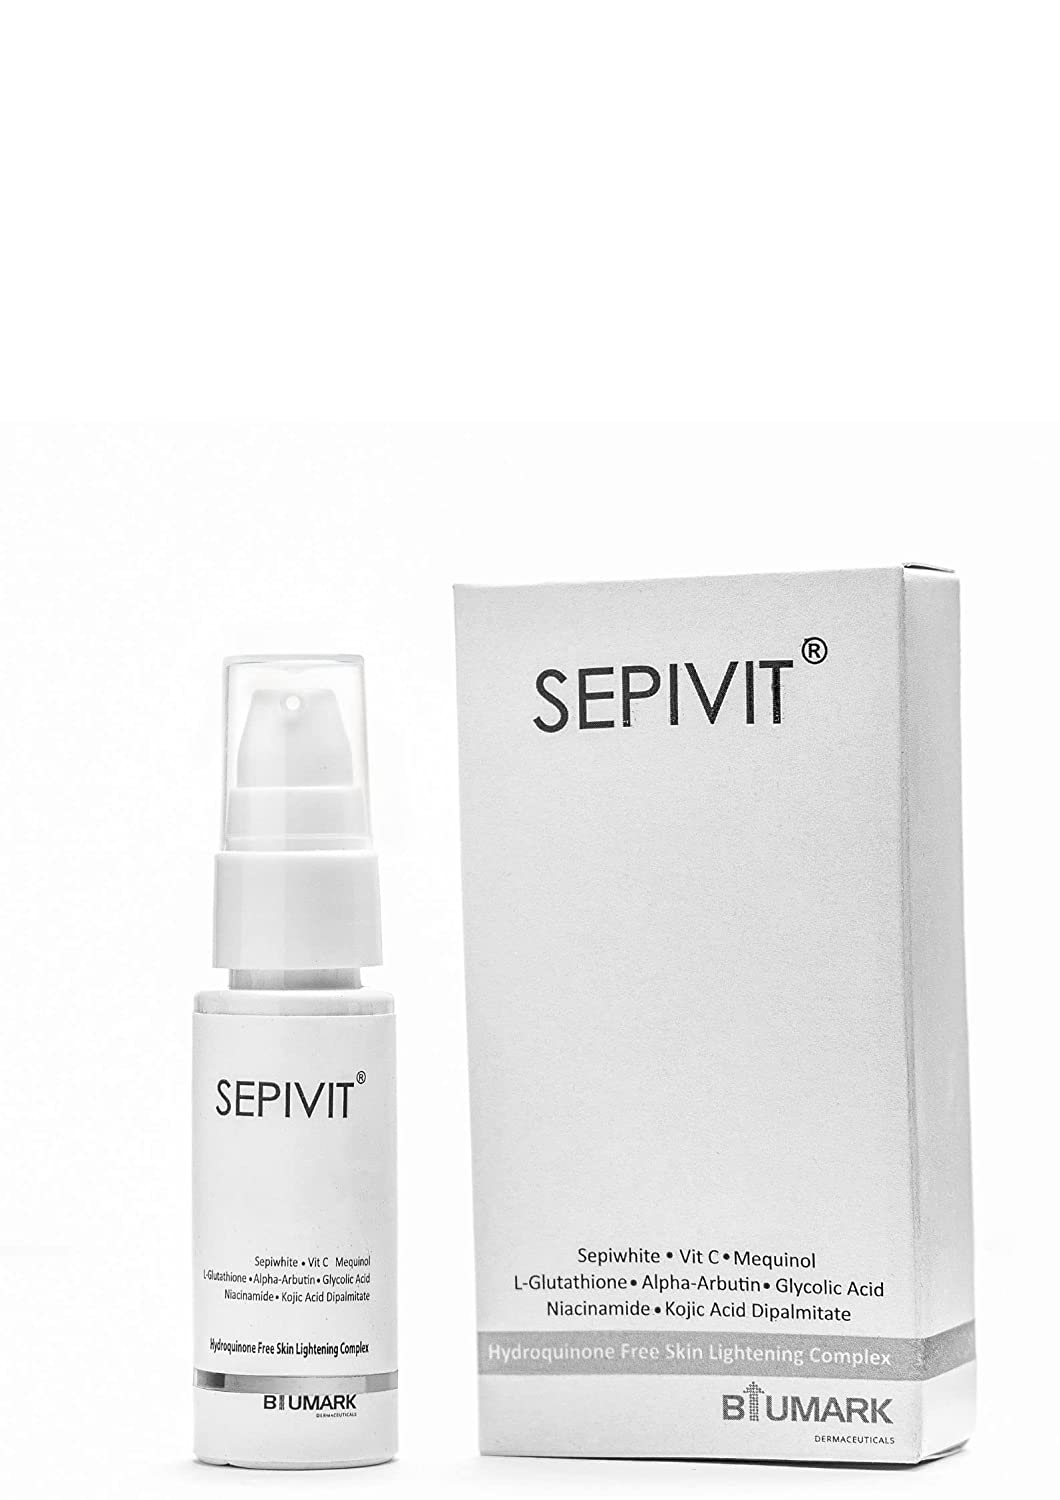 Sepivit Hydroquinone Free Skin Lightening Complex